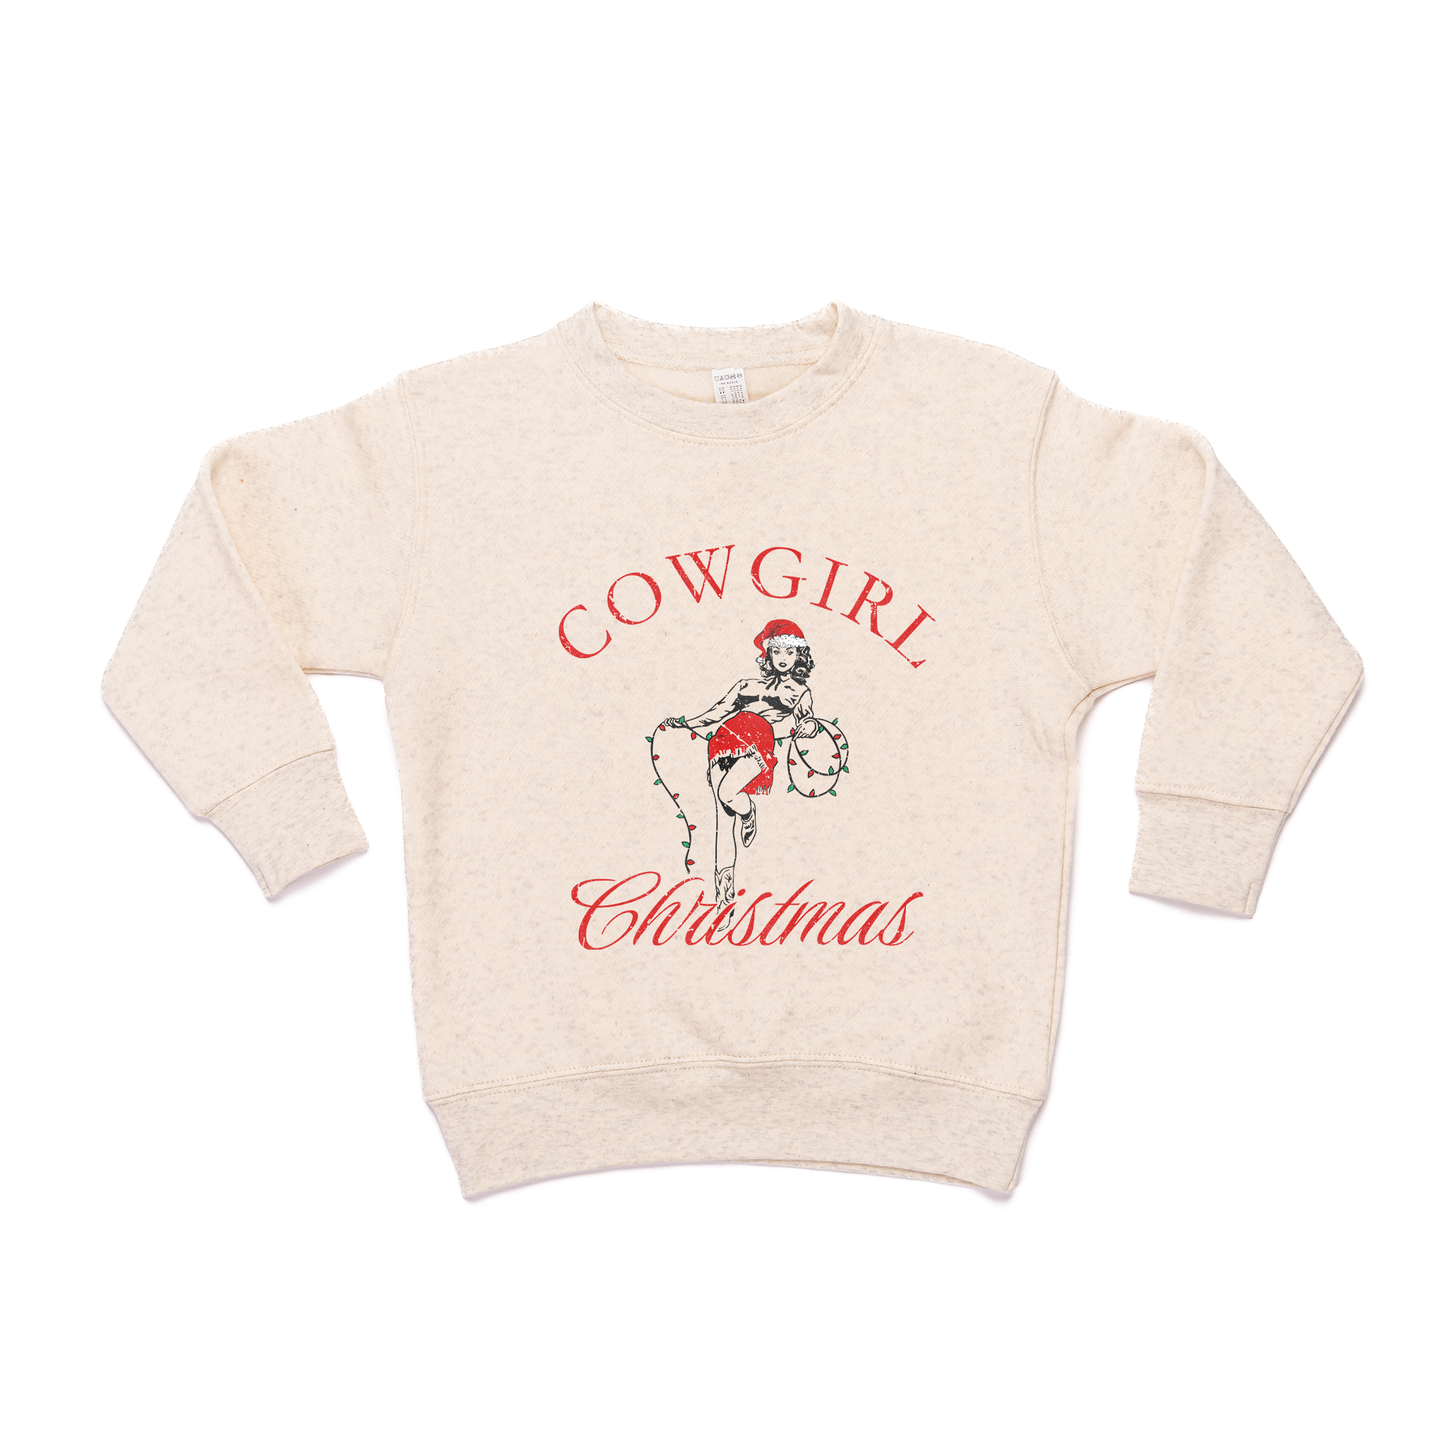 Cowgirl Christmas - Kids Sweatshirt (Heather Natural)